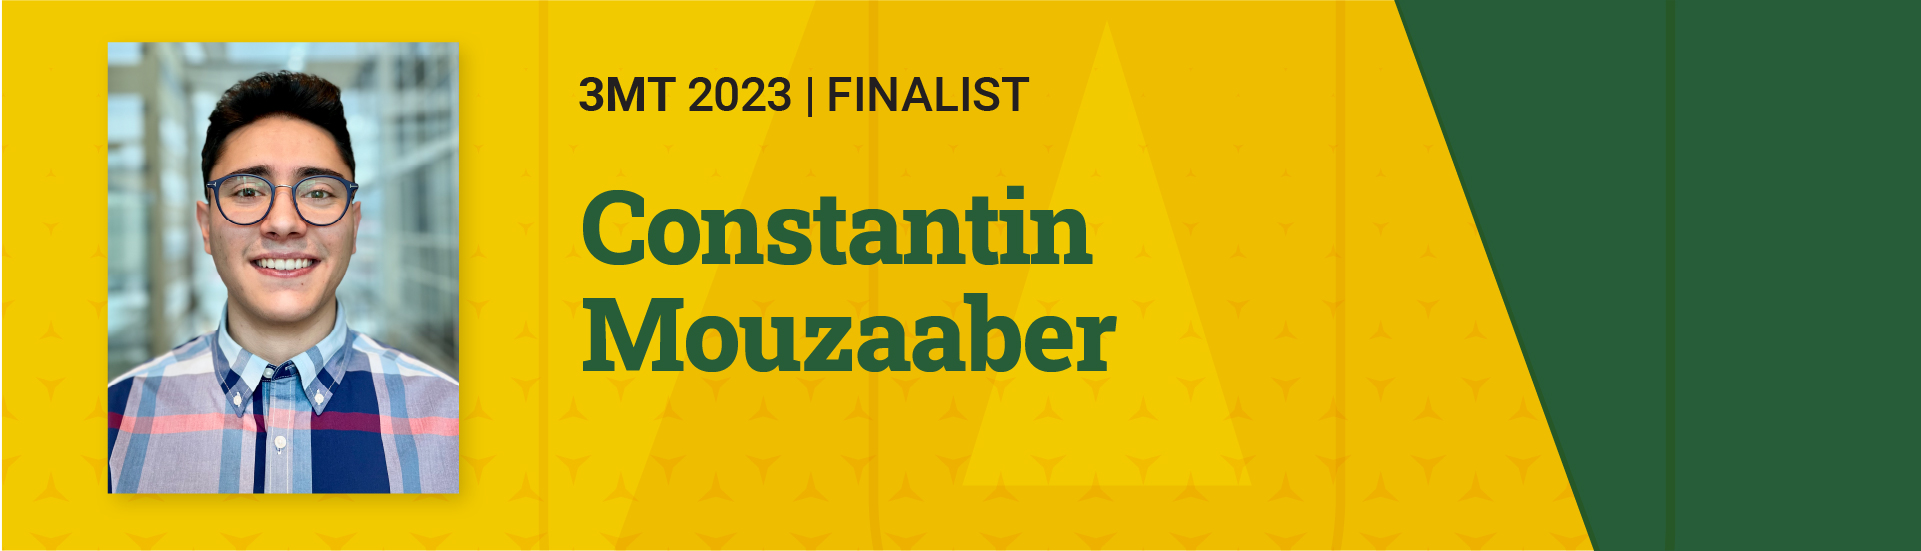 3MT 2023 Finalist  Constantin Mouzaaber 